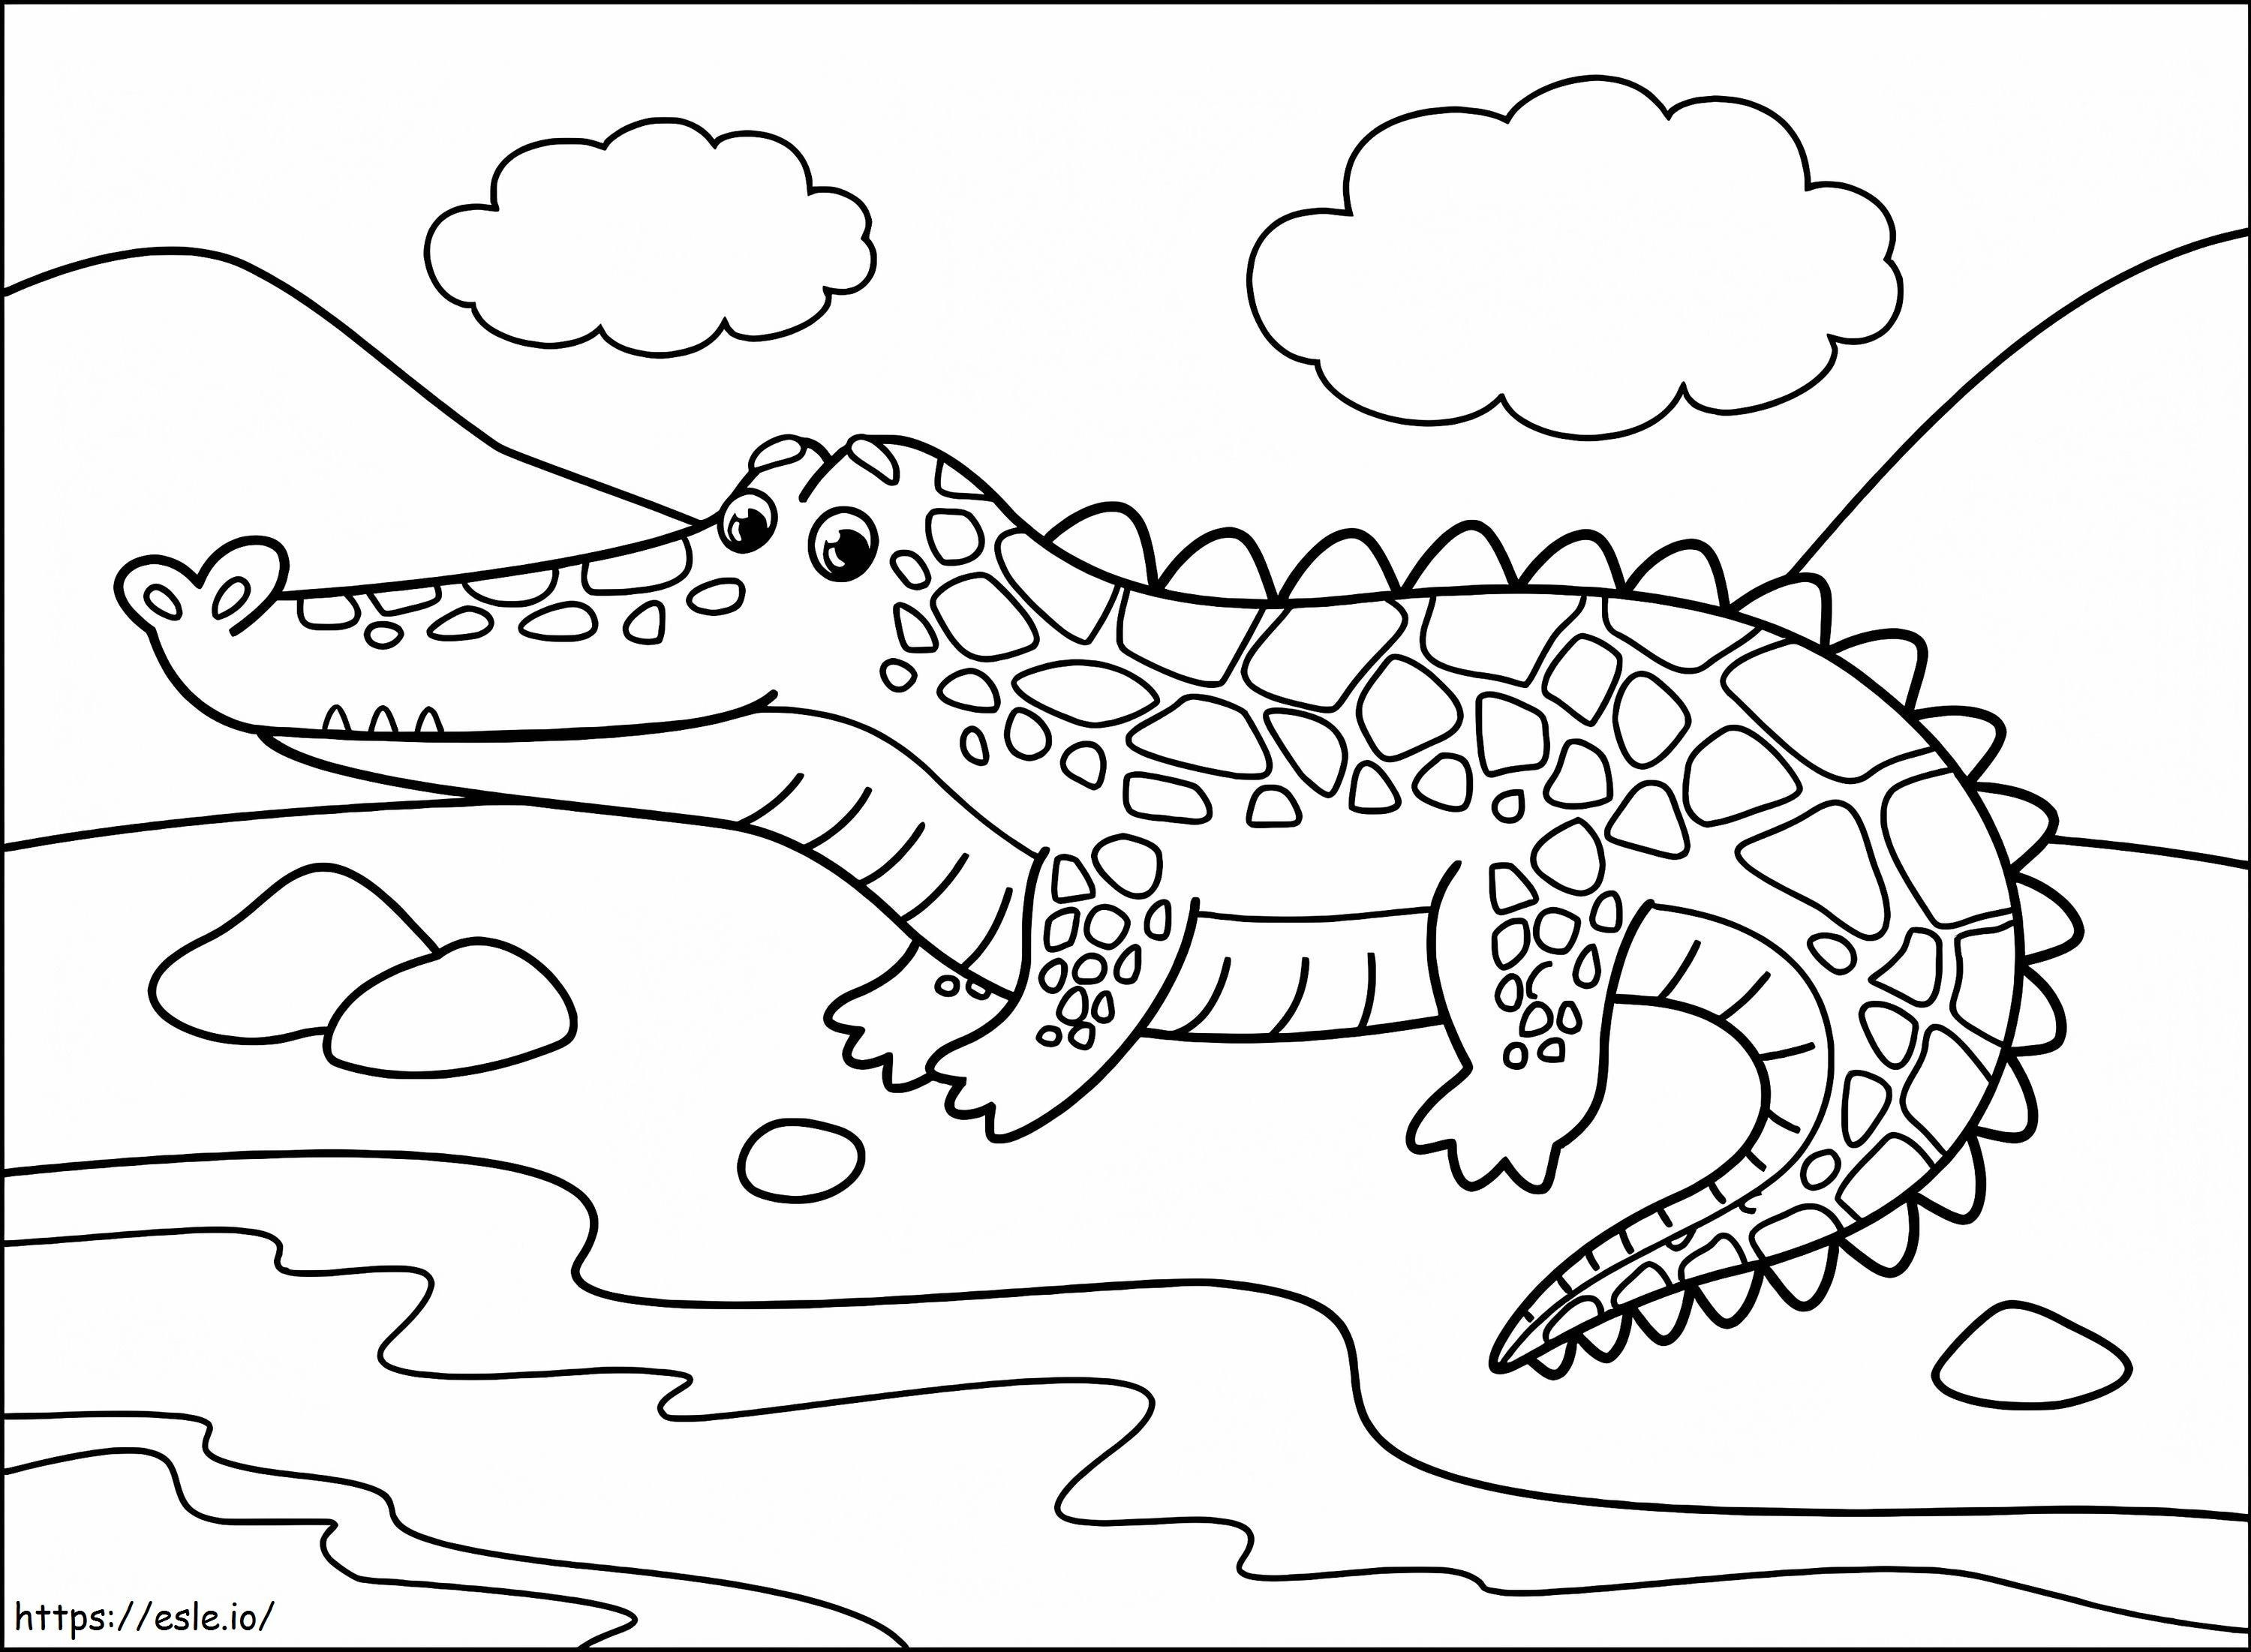 Coloriage Alligator amical à imprimer dessin